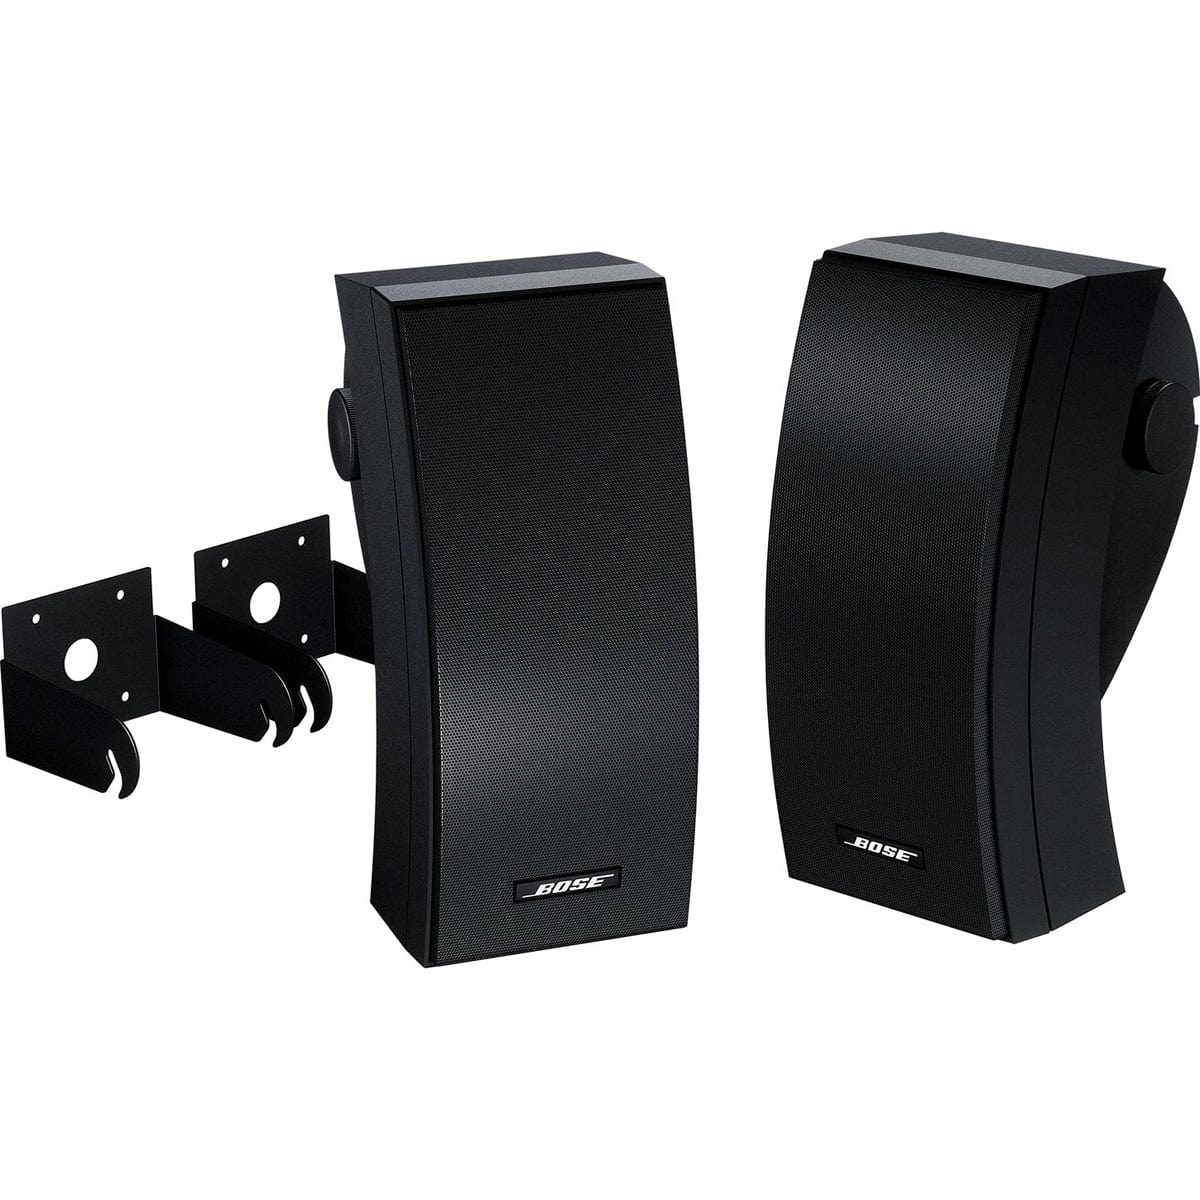 Bose 251 Environmental Speakers in Black include Wall Bracket | Atlantic Electrics